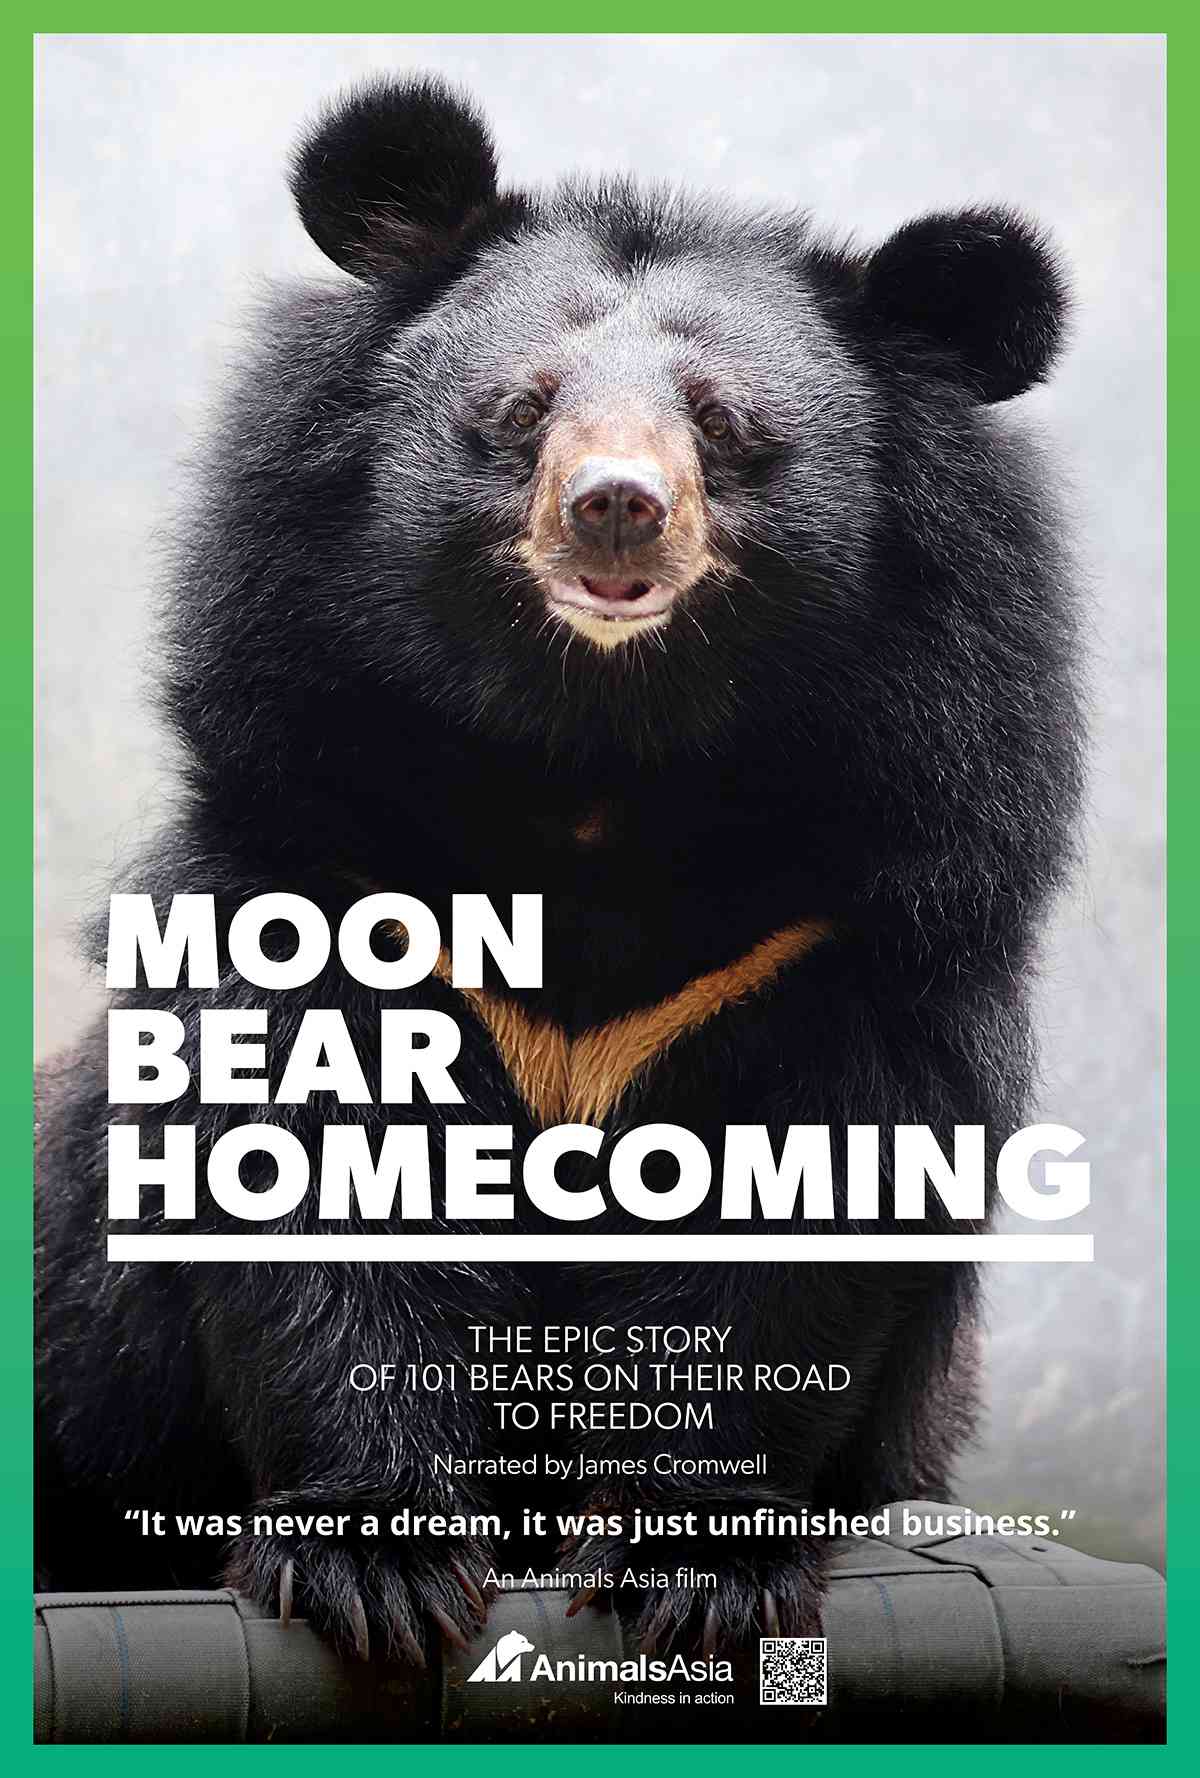 Resgate de 101 ursos da indústria abusiva de bile Farm inspira o curta-metragem Moon Bear Homecoming